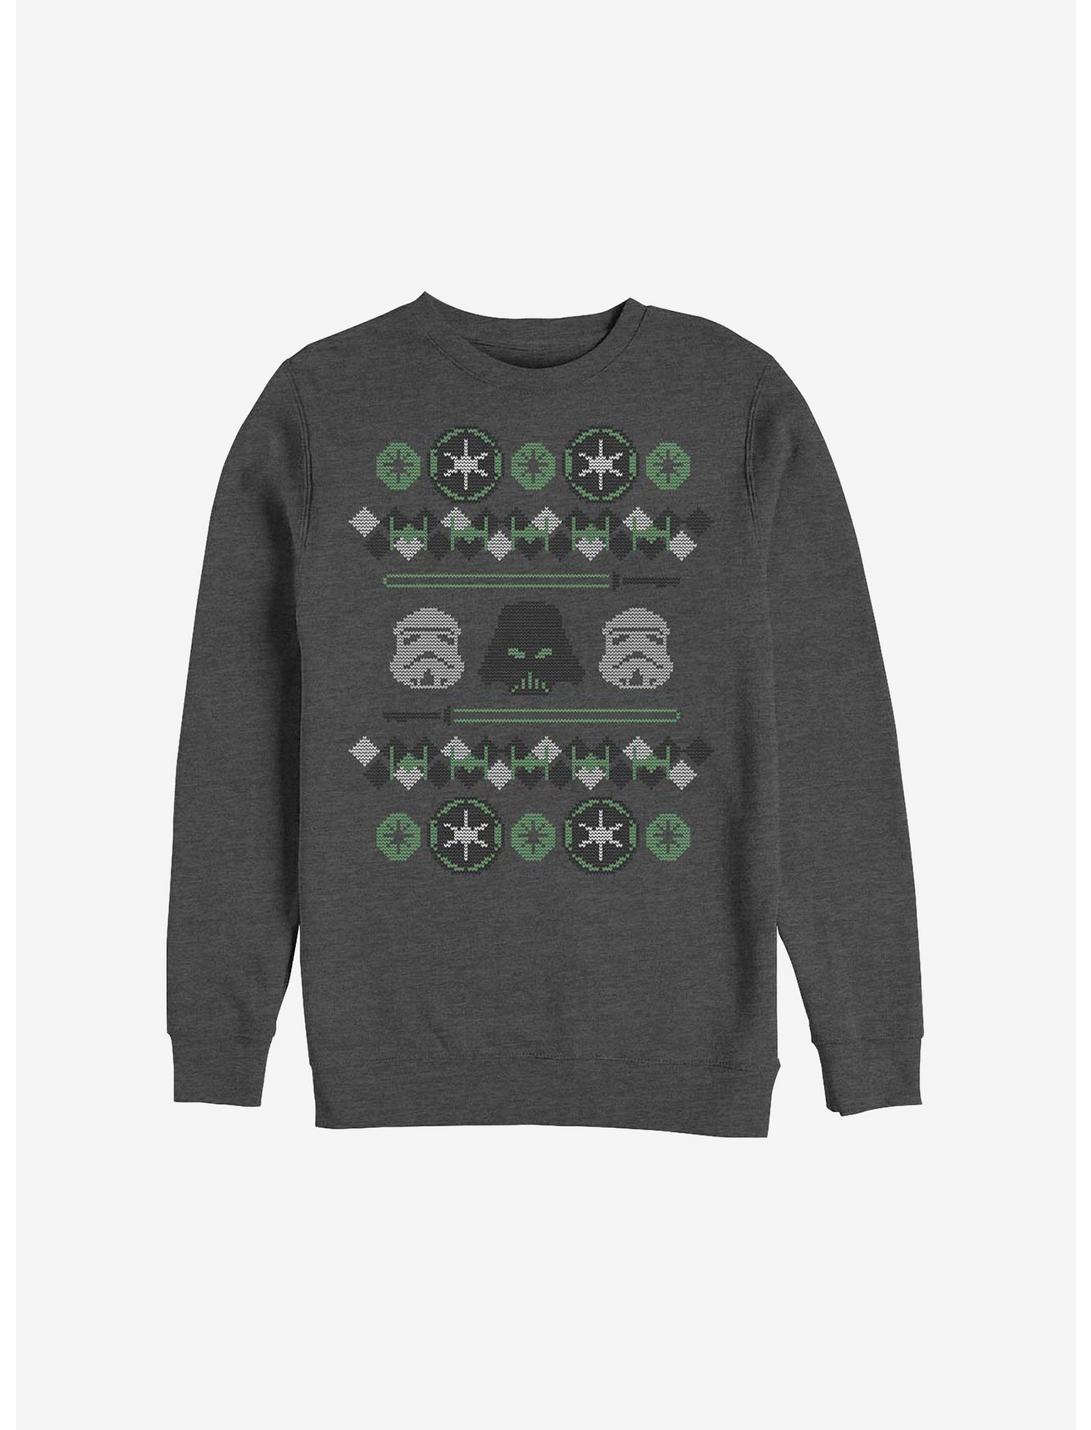 Star Wars Empire Holiday Ugly Christmas Sweater Sweatshirt, CHAR HTR, hi-res